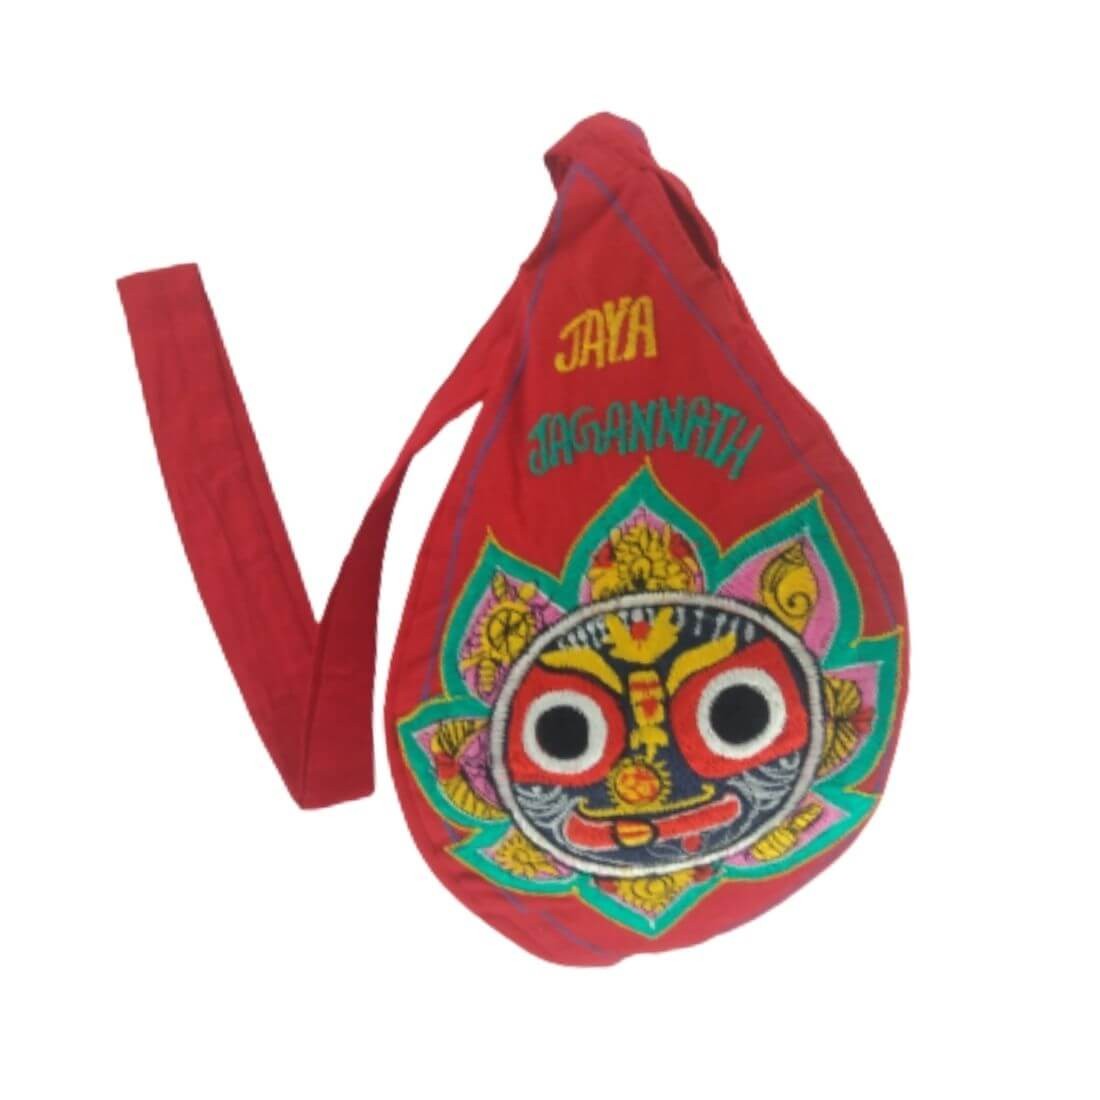 MAYAPURI Traditional Jay Jagannath Embroidery Japa Bag/Chanting/Beads Bag (Red)